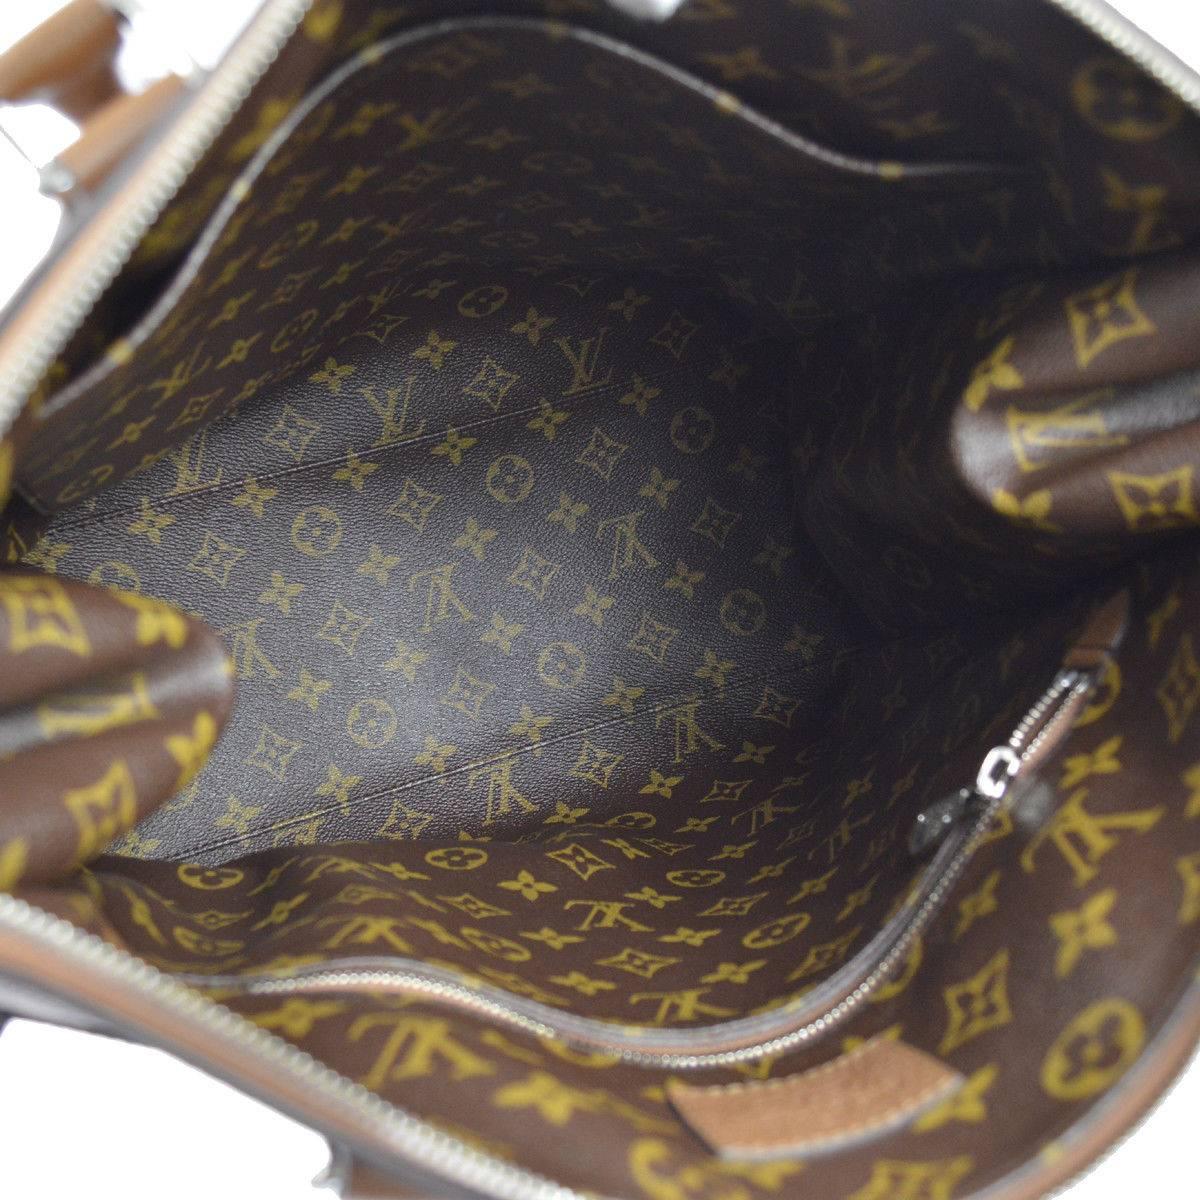 Women's Louis Vuitton Limited Edition Cognac Leather Men's Travel Carryall Tote Bag